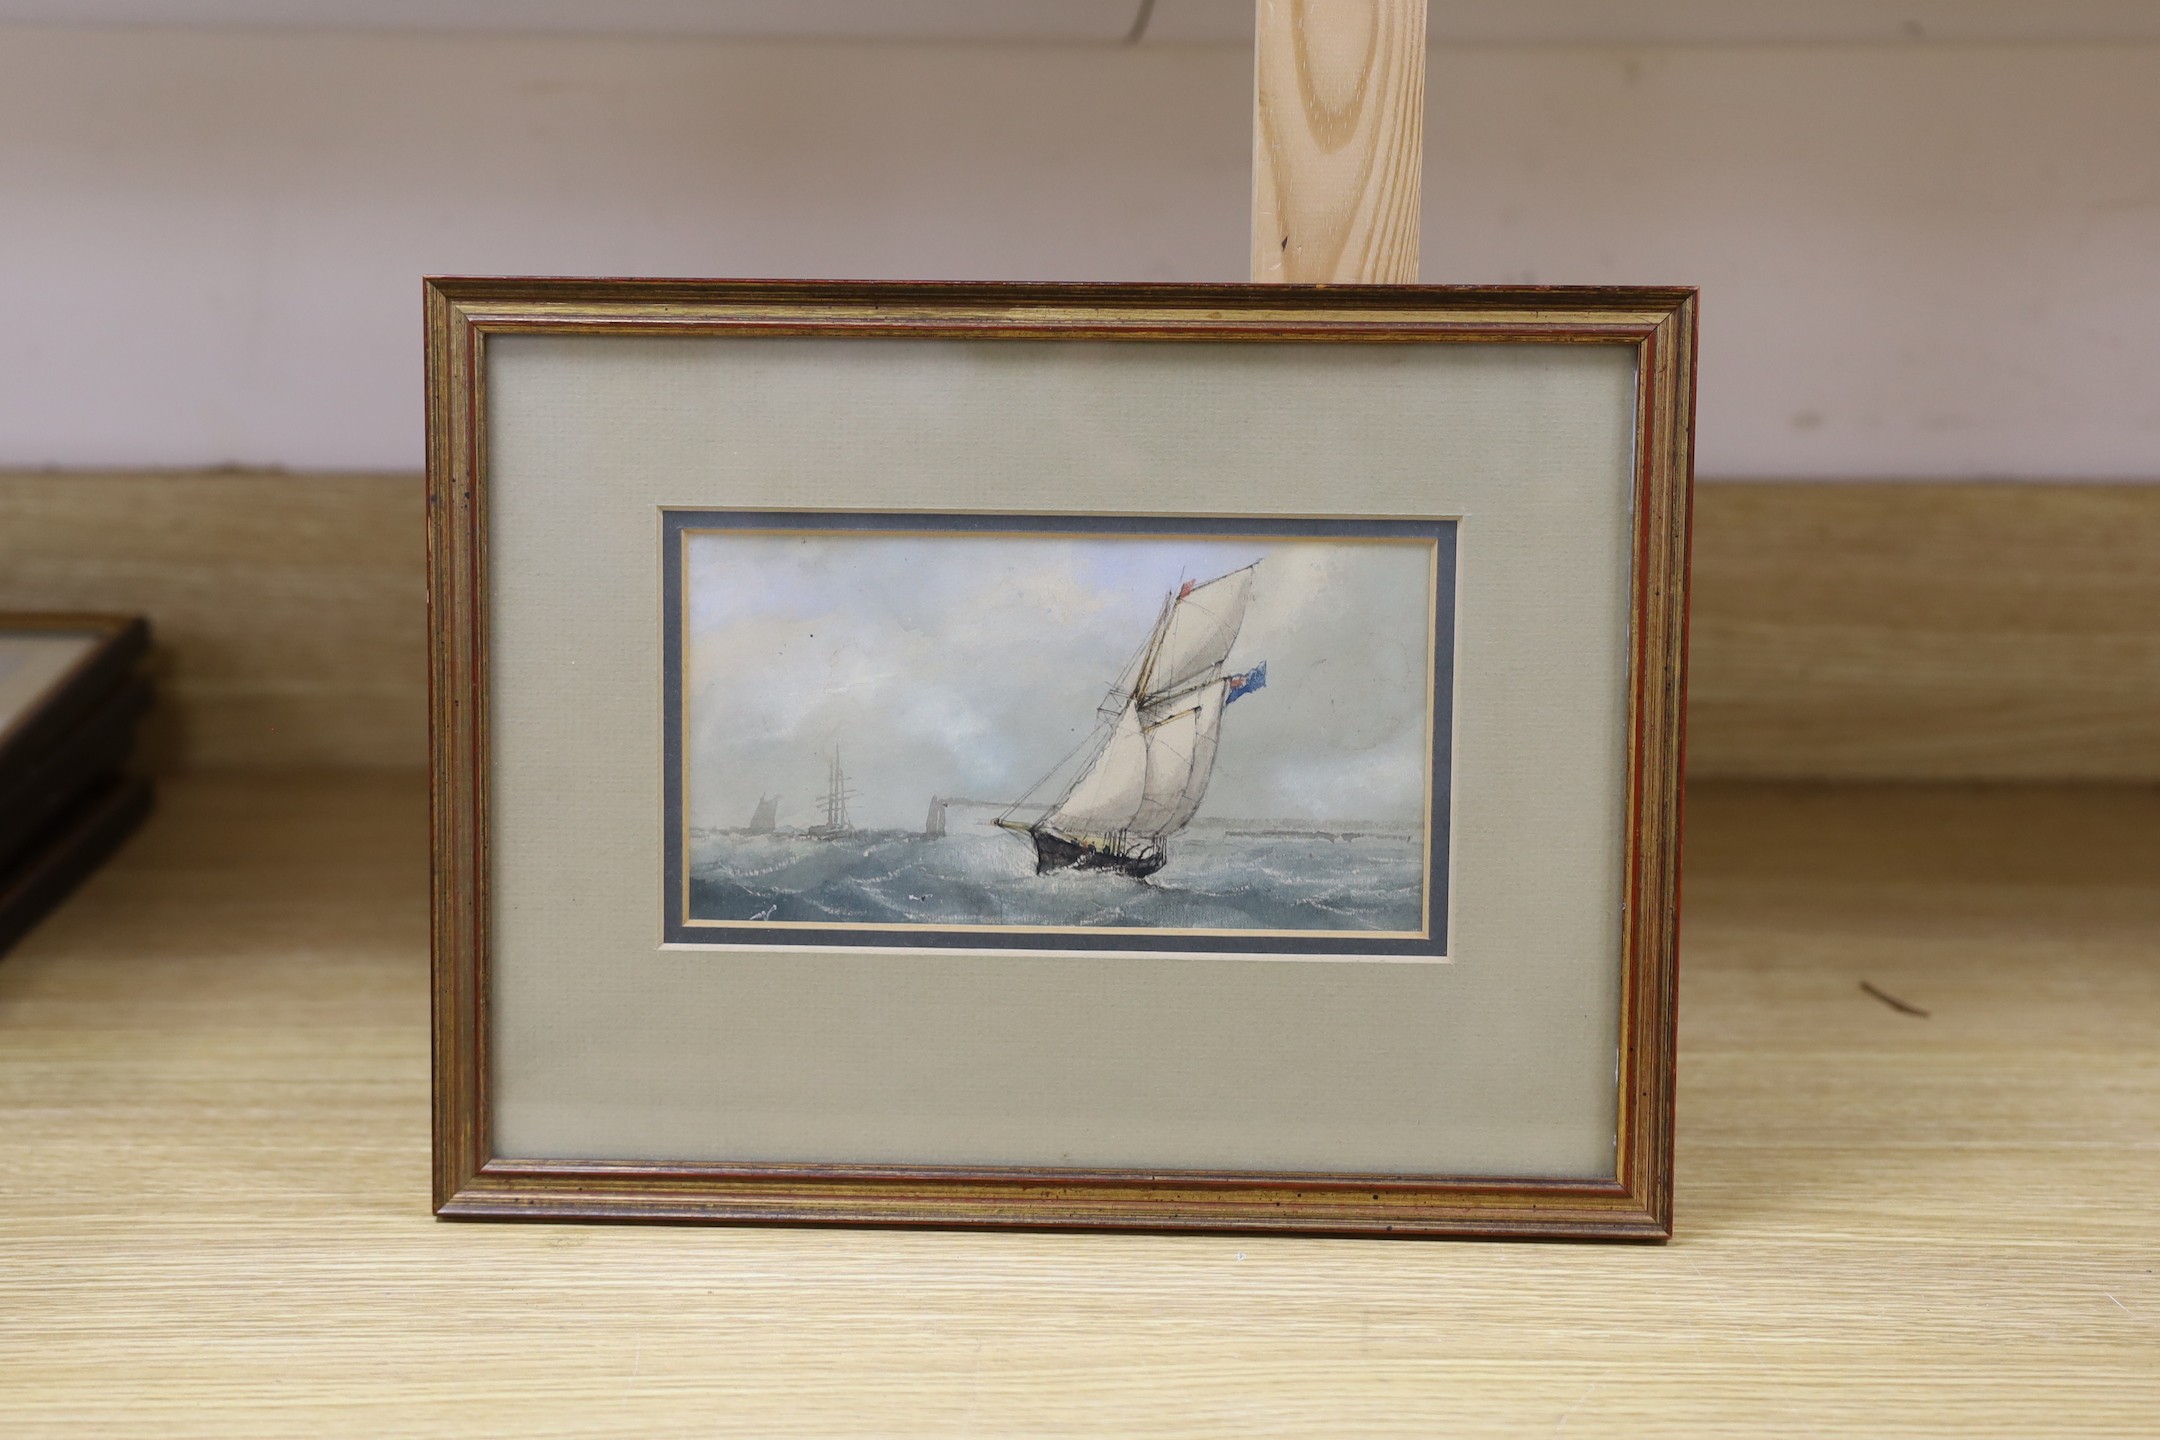 W. Cluett, watercolour, Yacht with blue Ensign off Headland, 10 x 20cm